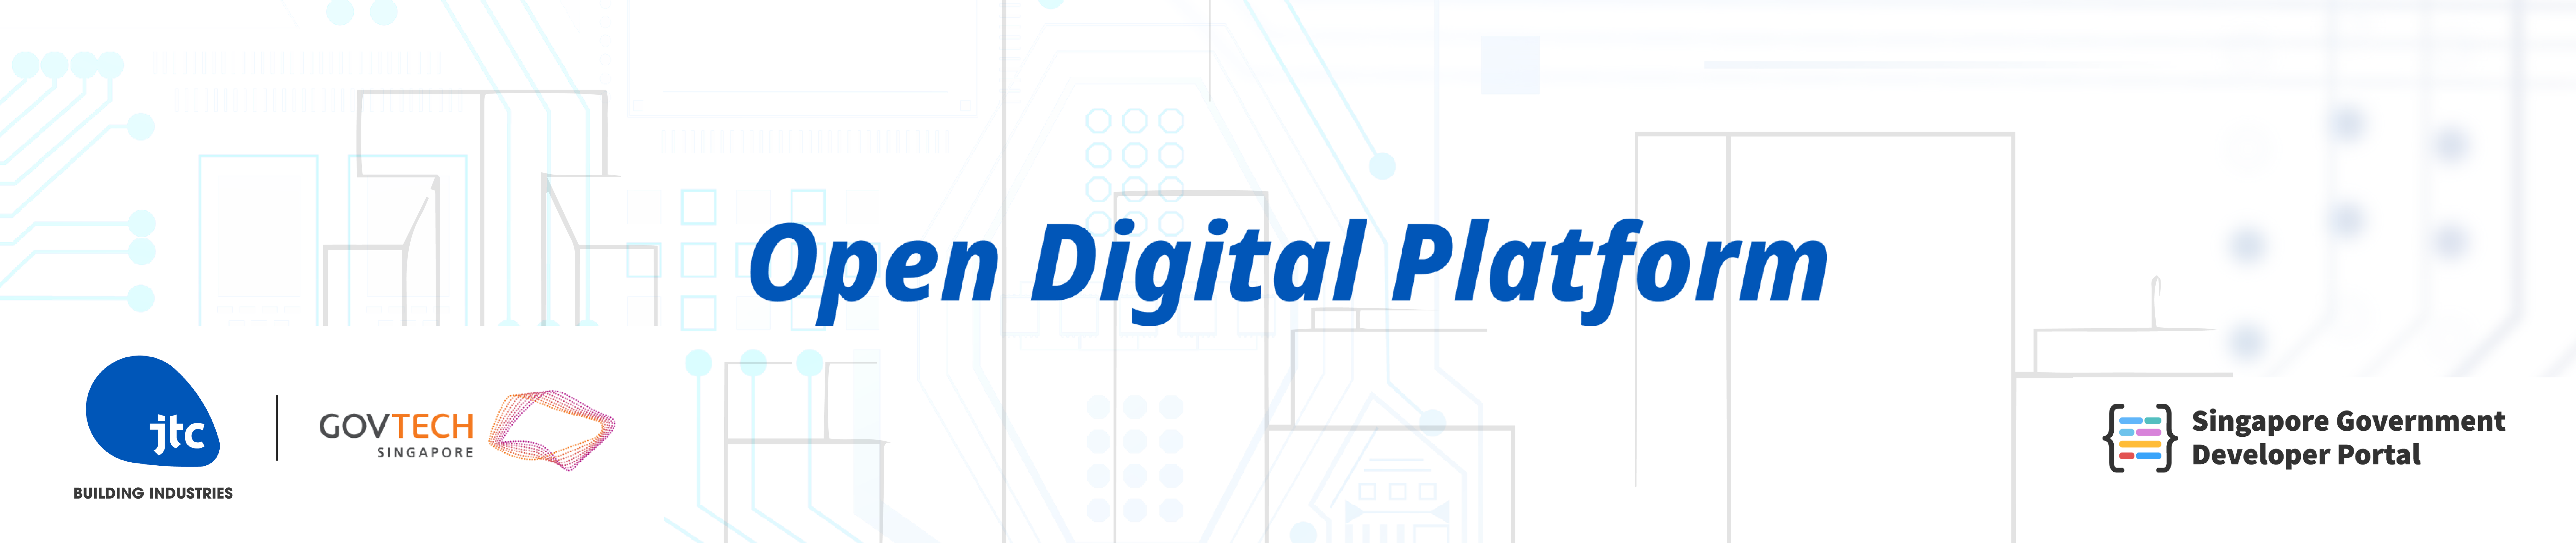 Open Digital Platform header banner